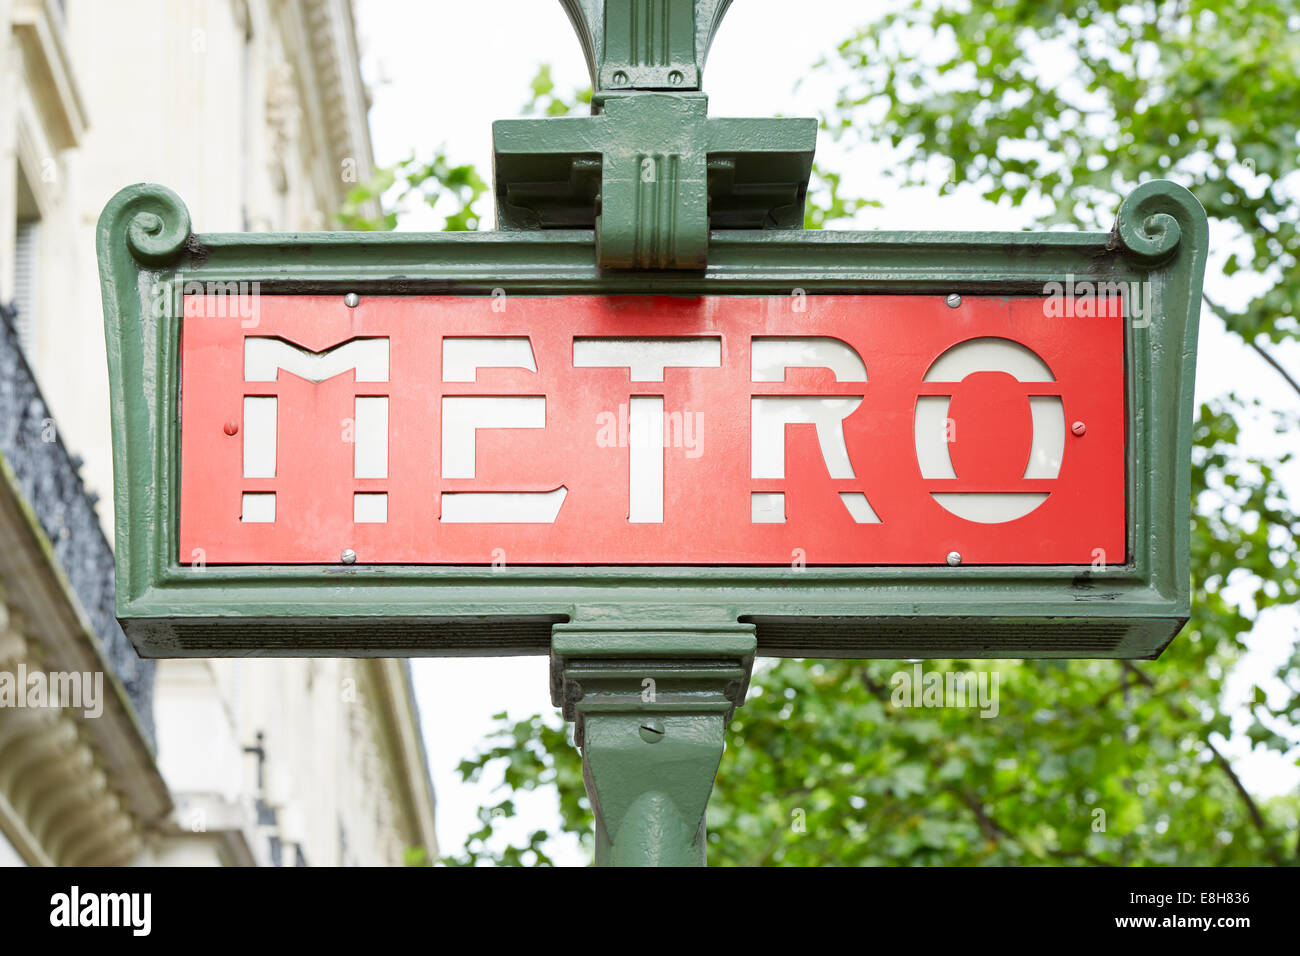 Paris subway, metro sign Stock Photo